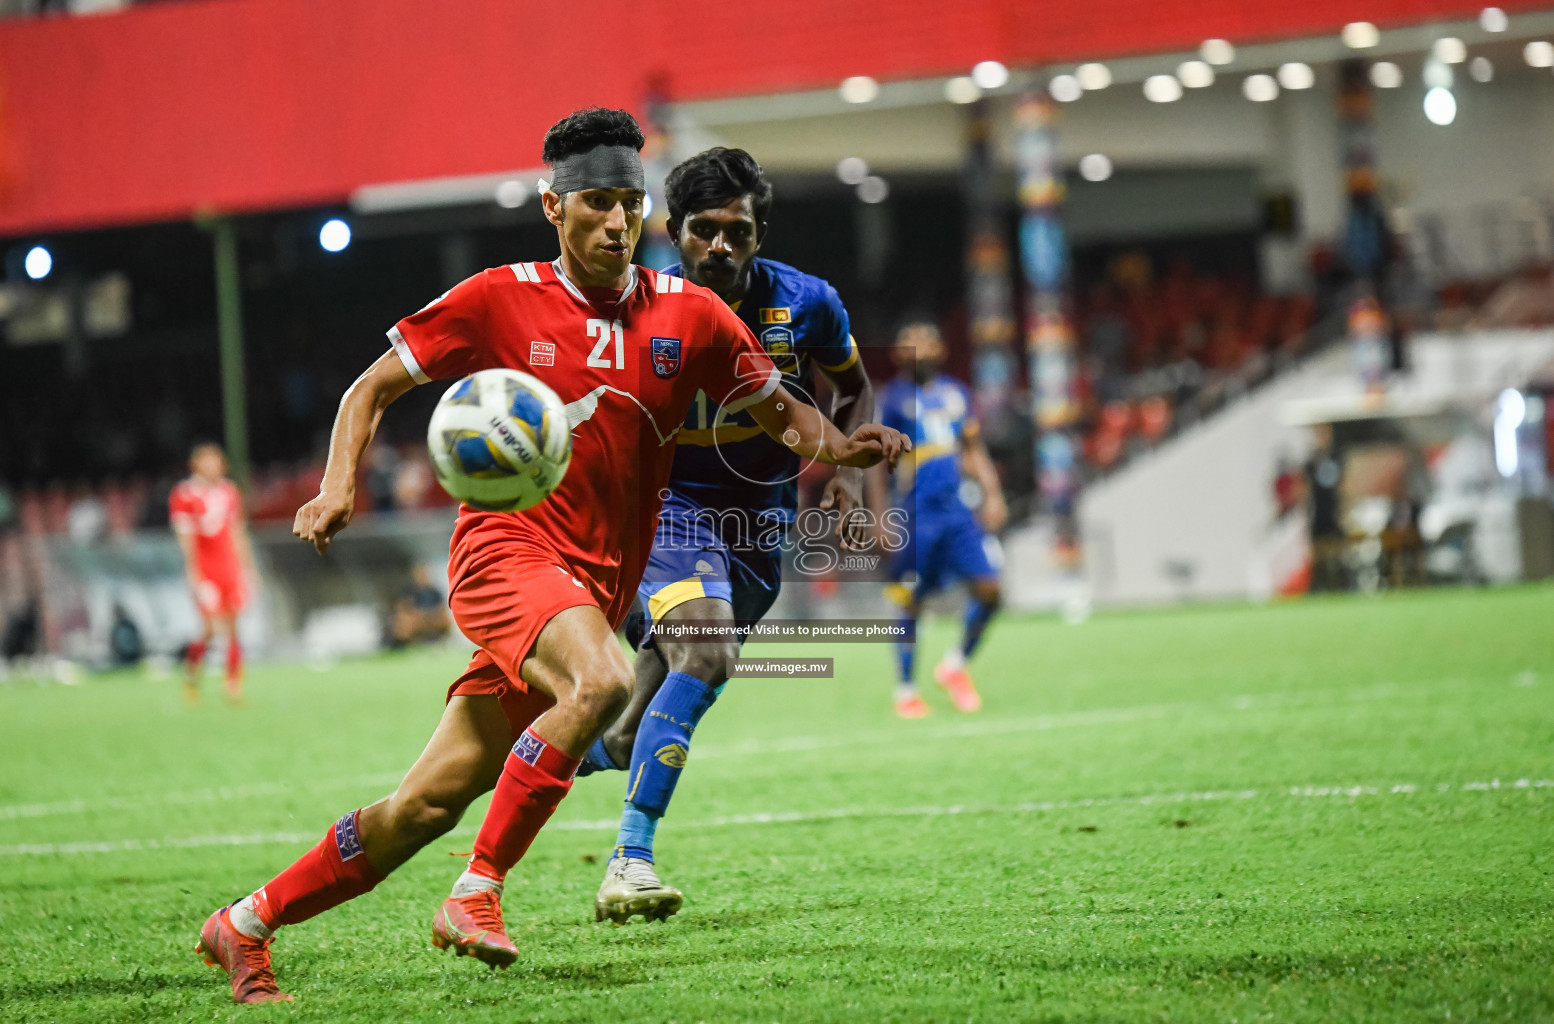 Nepal vs Sri Lanka in SAFF Championship 2021 held on 4th October 2021 in Galolhu National Stadium, Male', Maldives